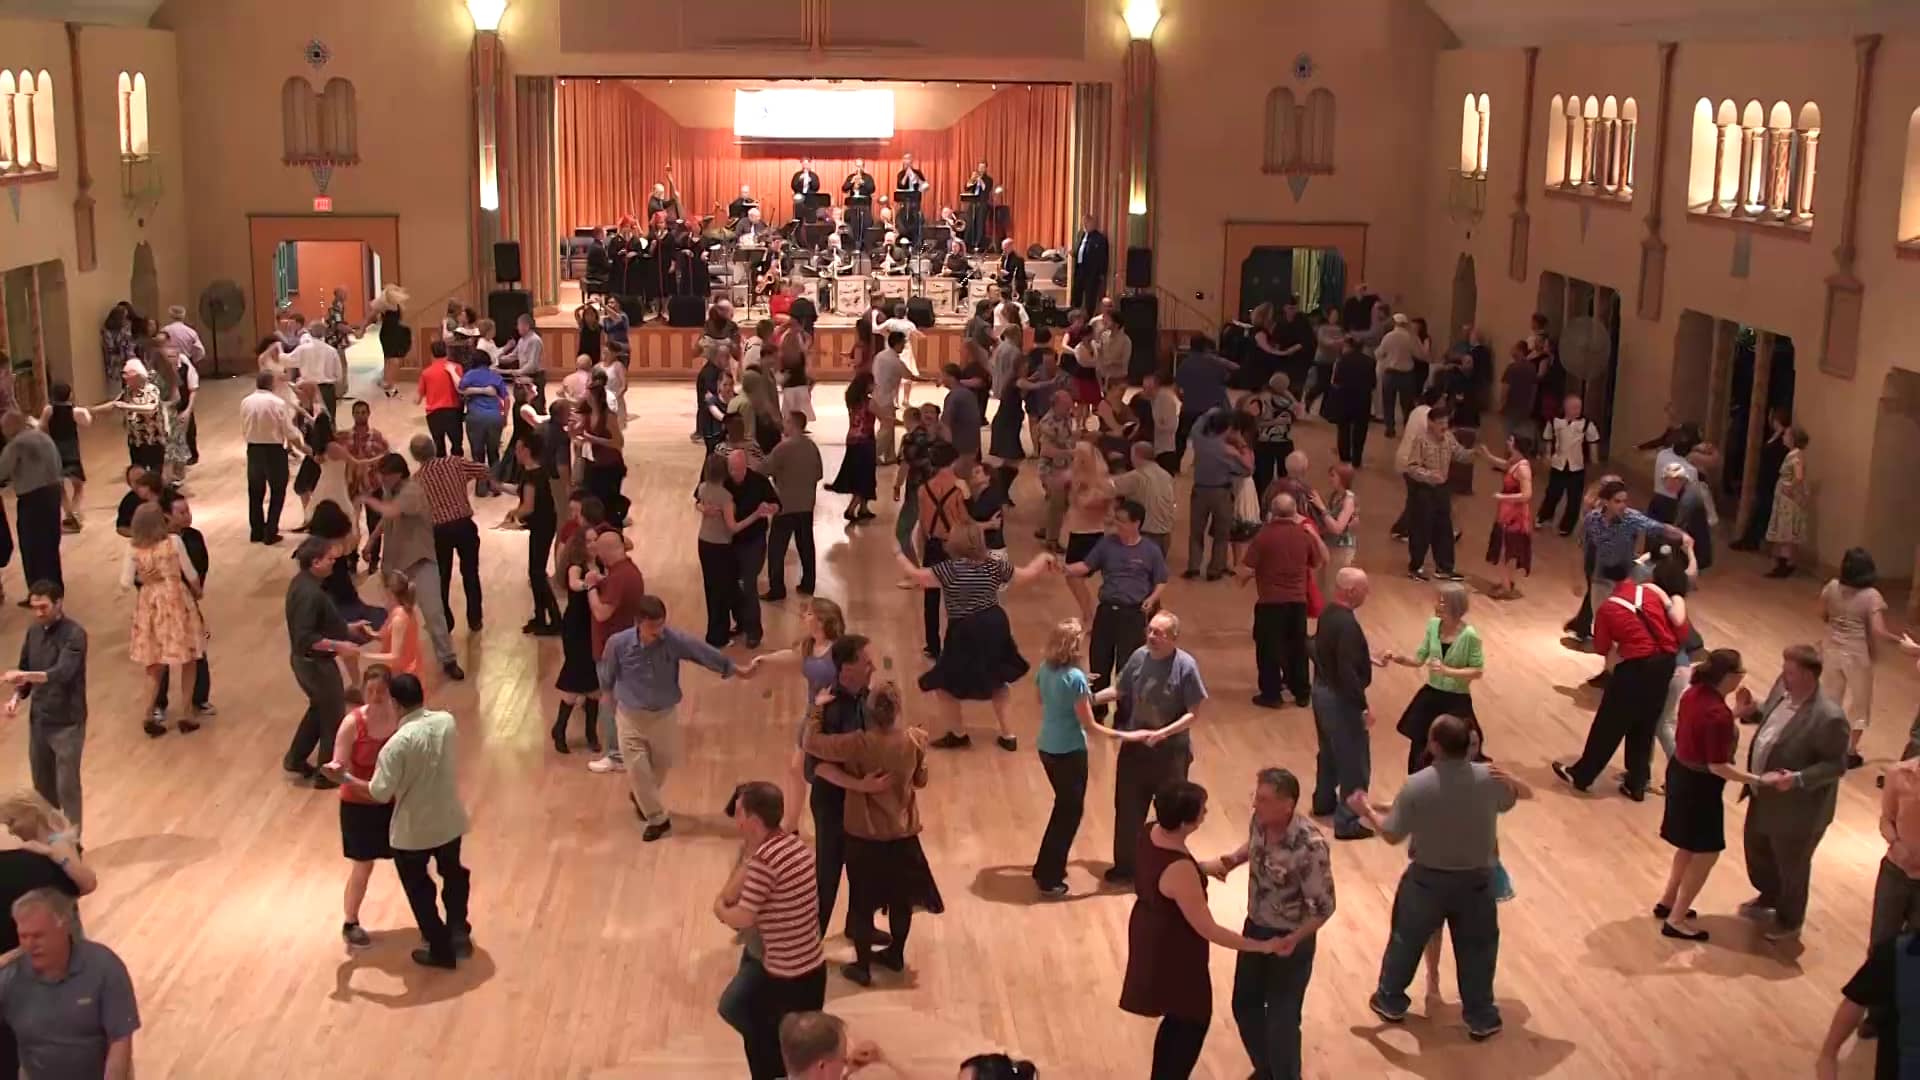 The Spanish Ballroom at Glen Echo Park on Vimeo